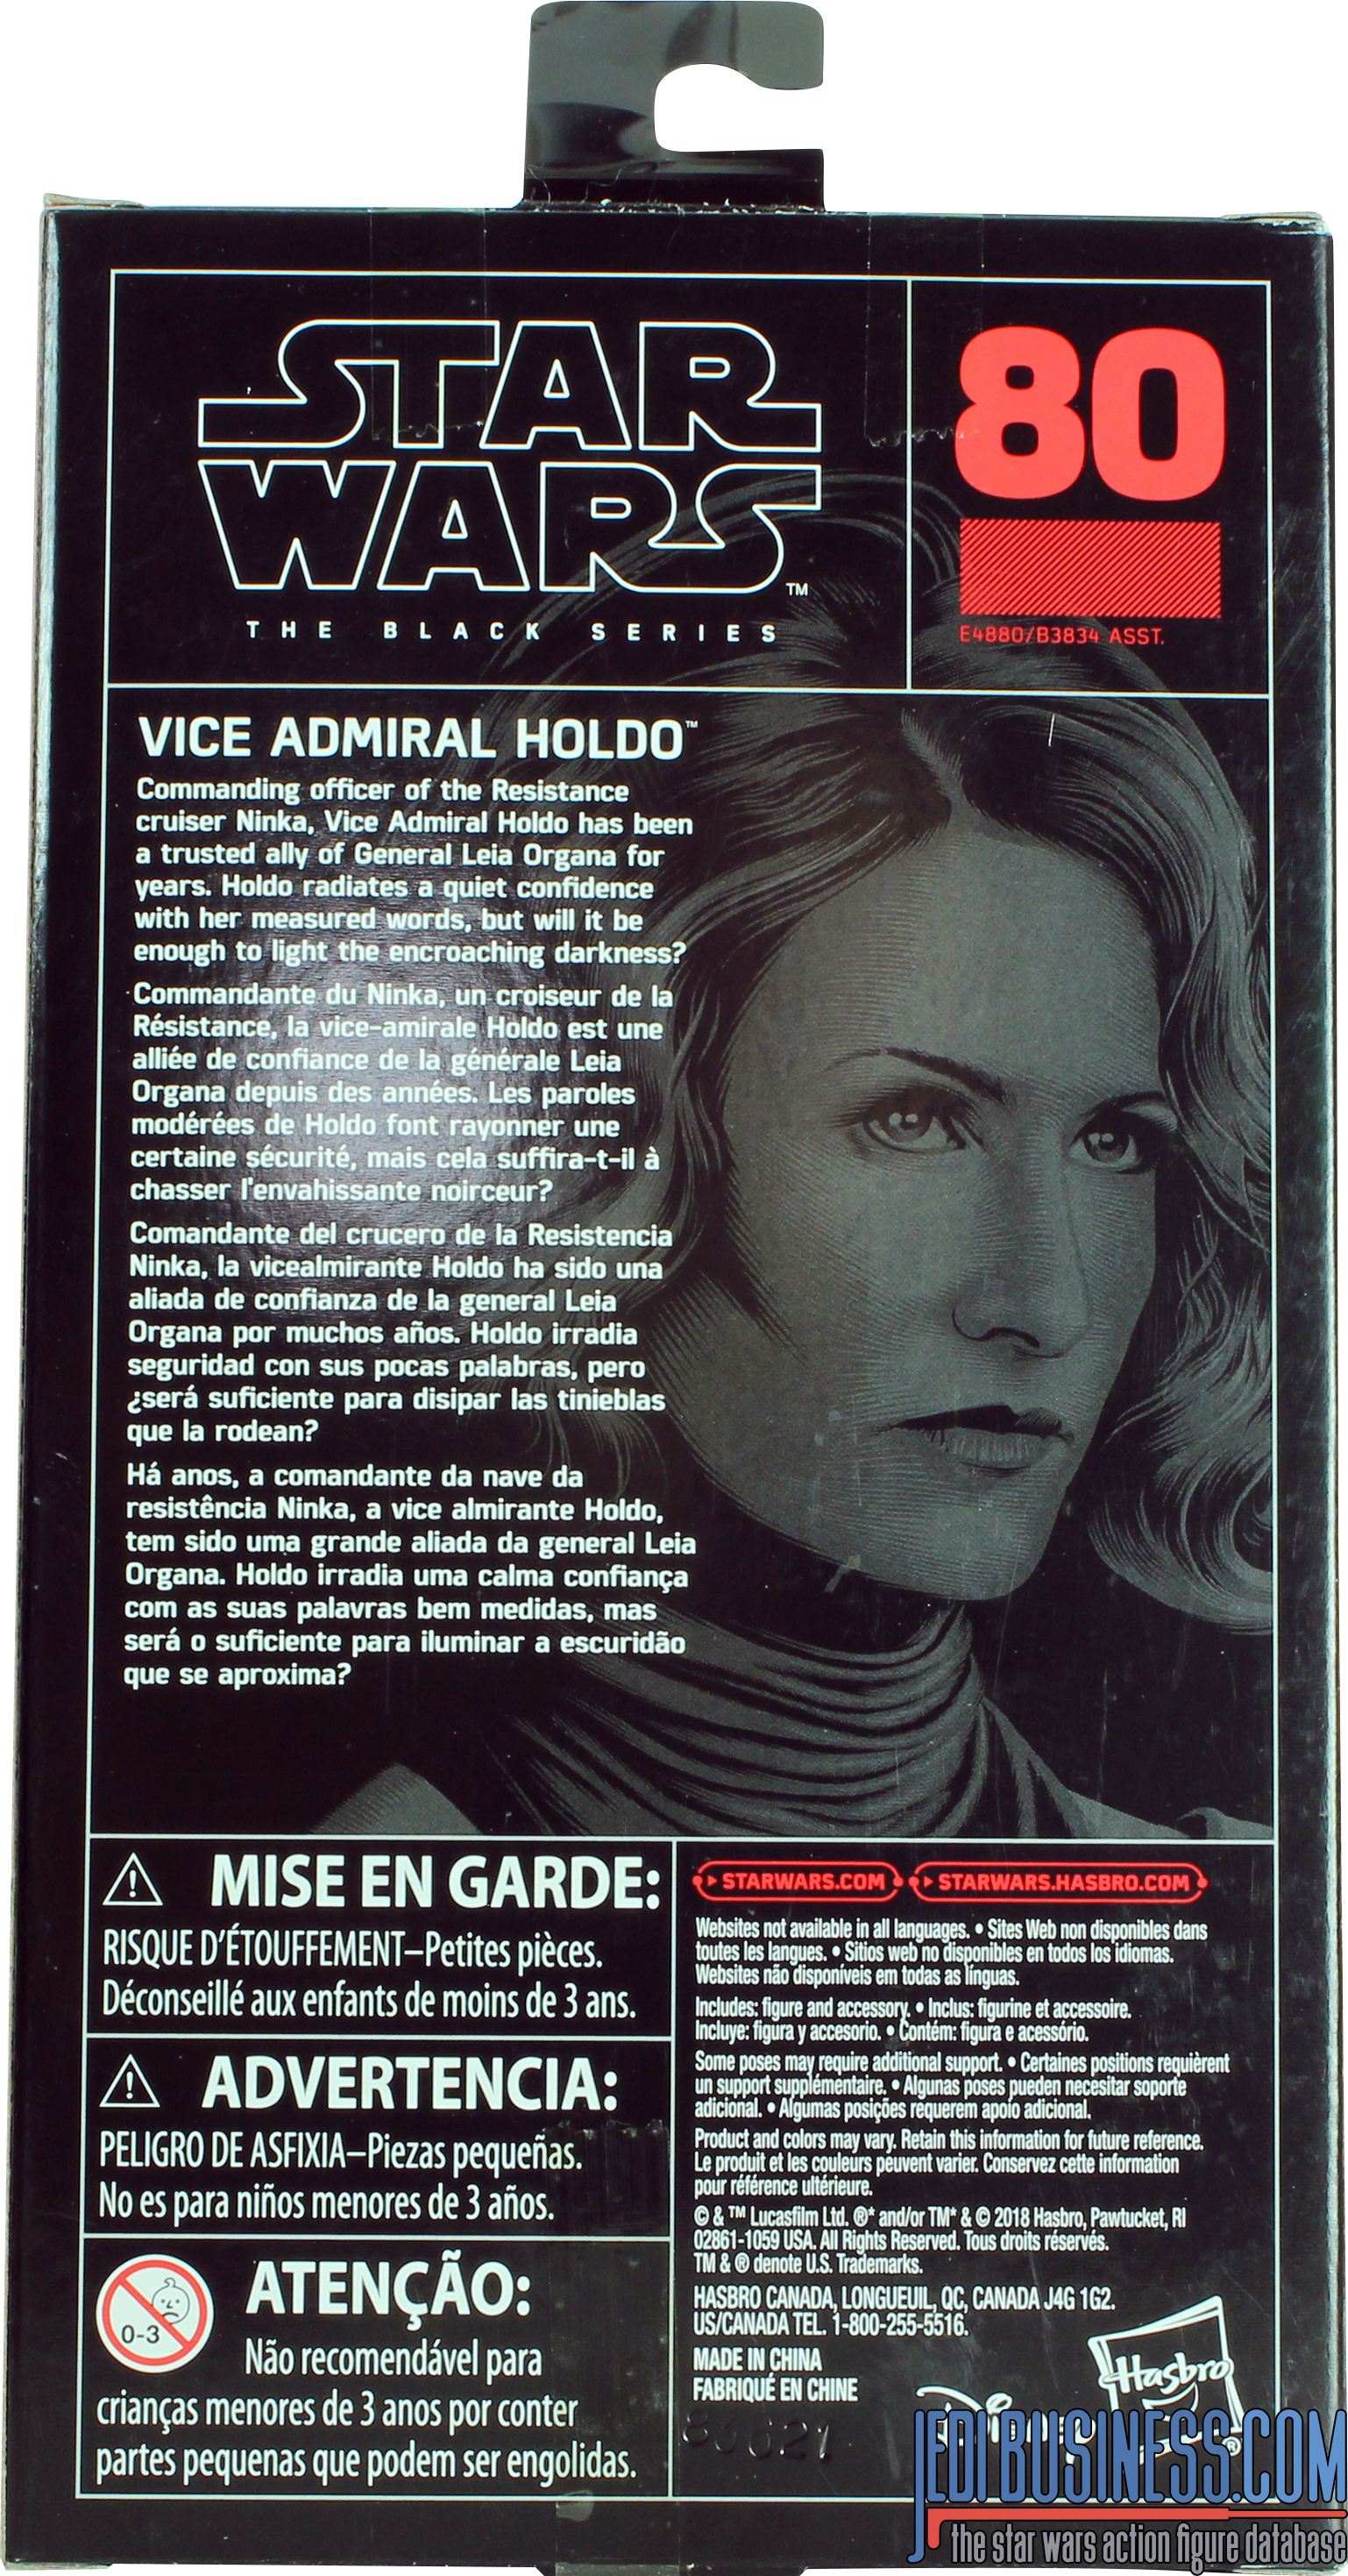 Vice Admiral Holdo